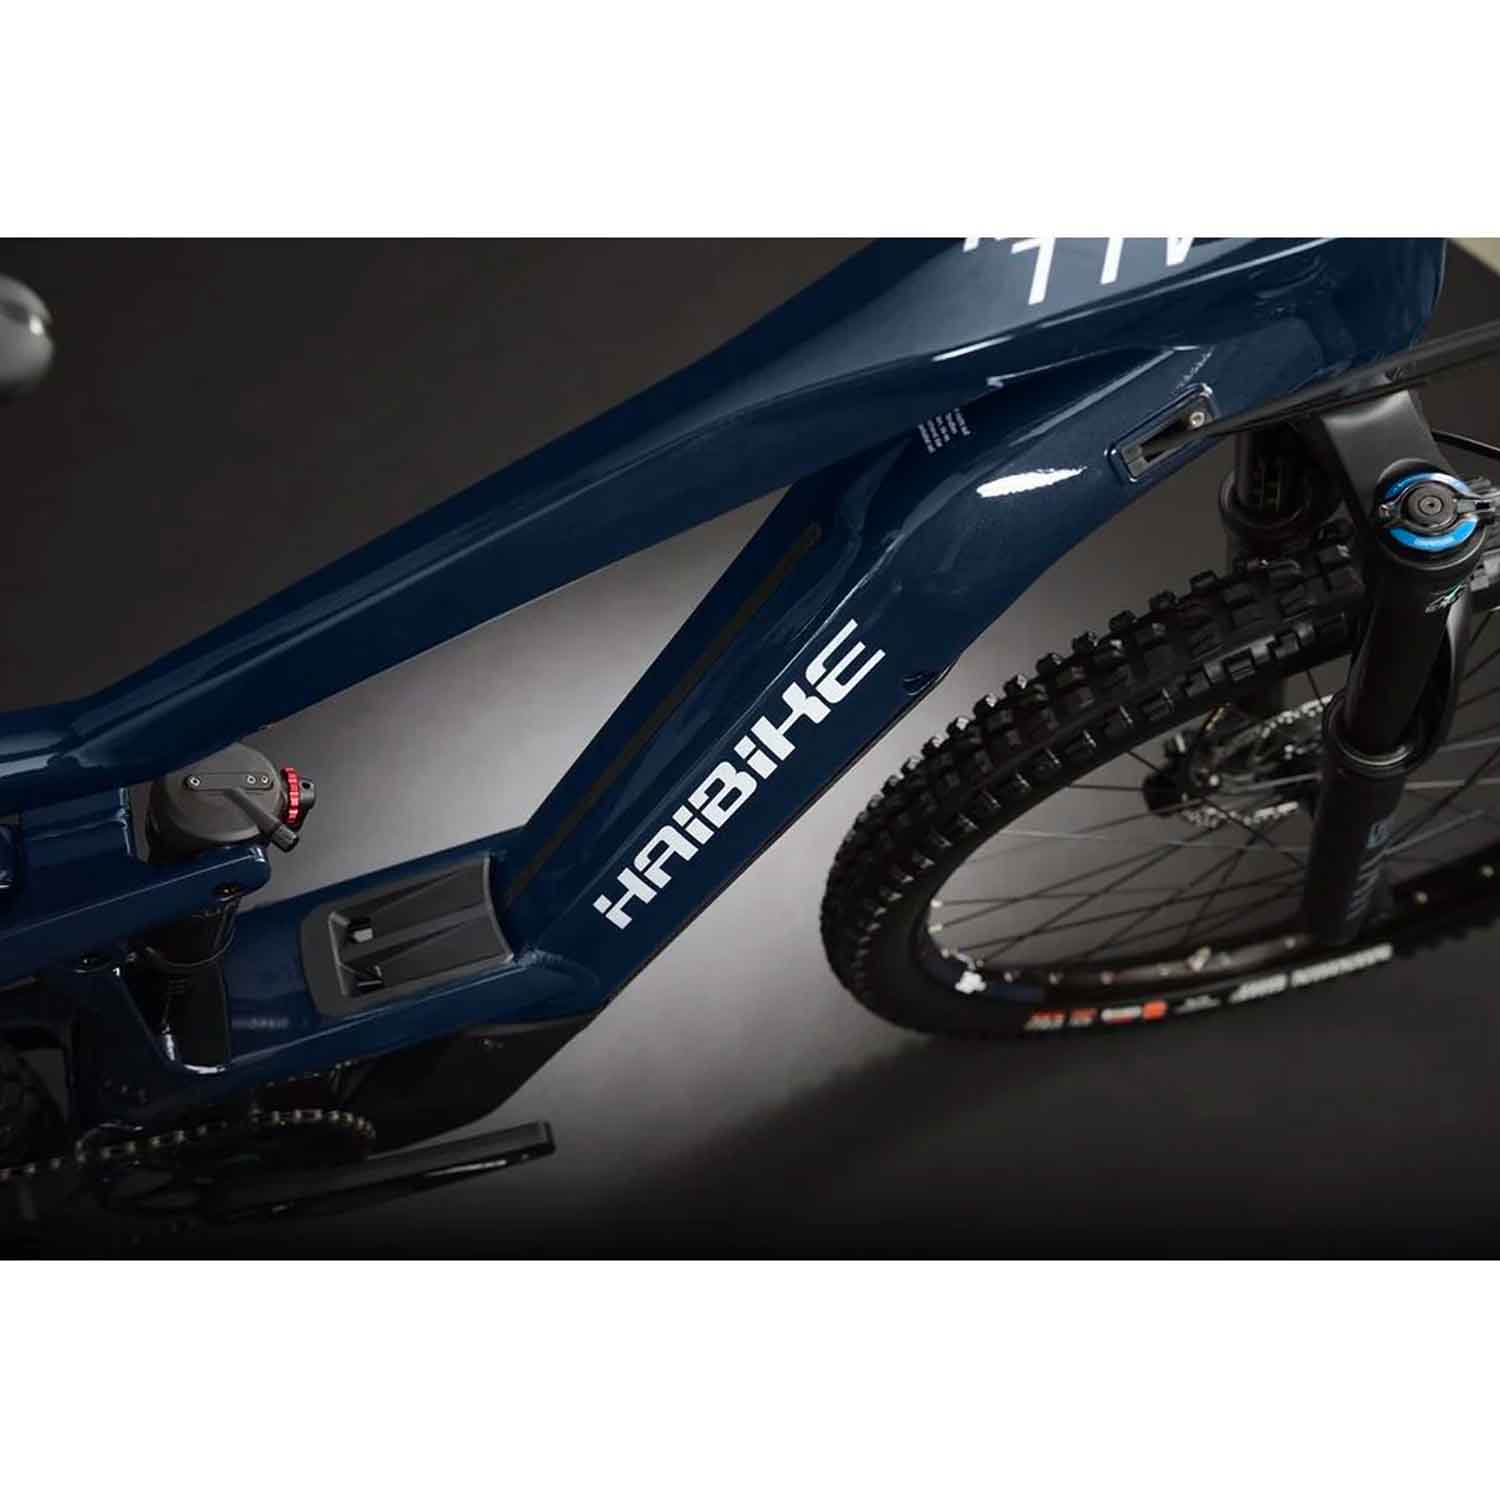 Haibike ALLMTN 3, e-bike MTN/ATB, Navy Blue, bixbybicycles.com